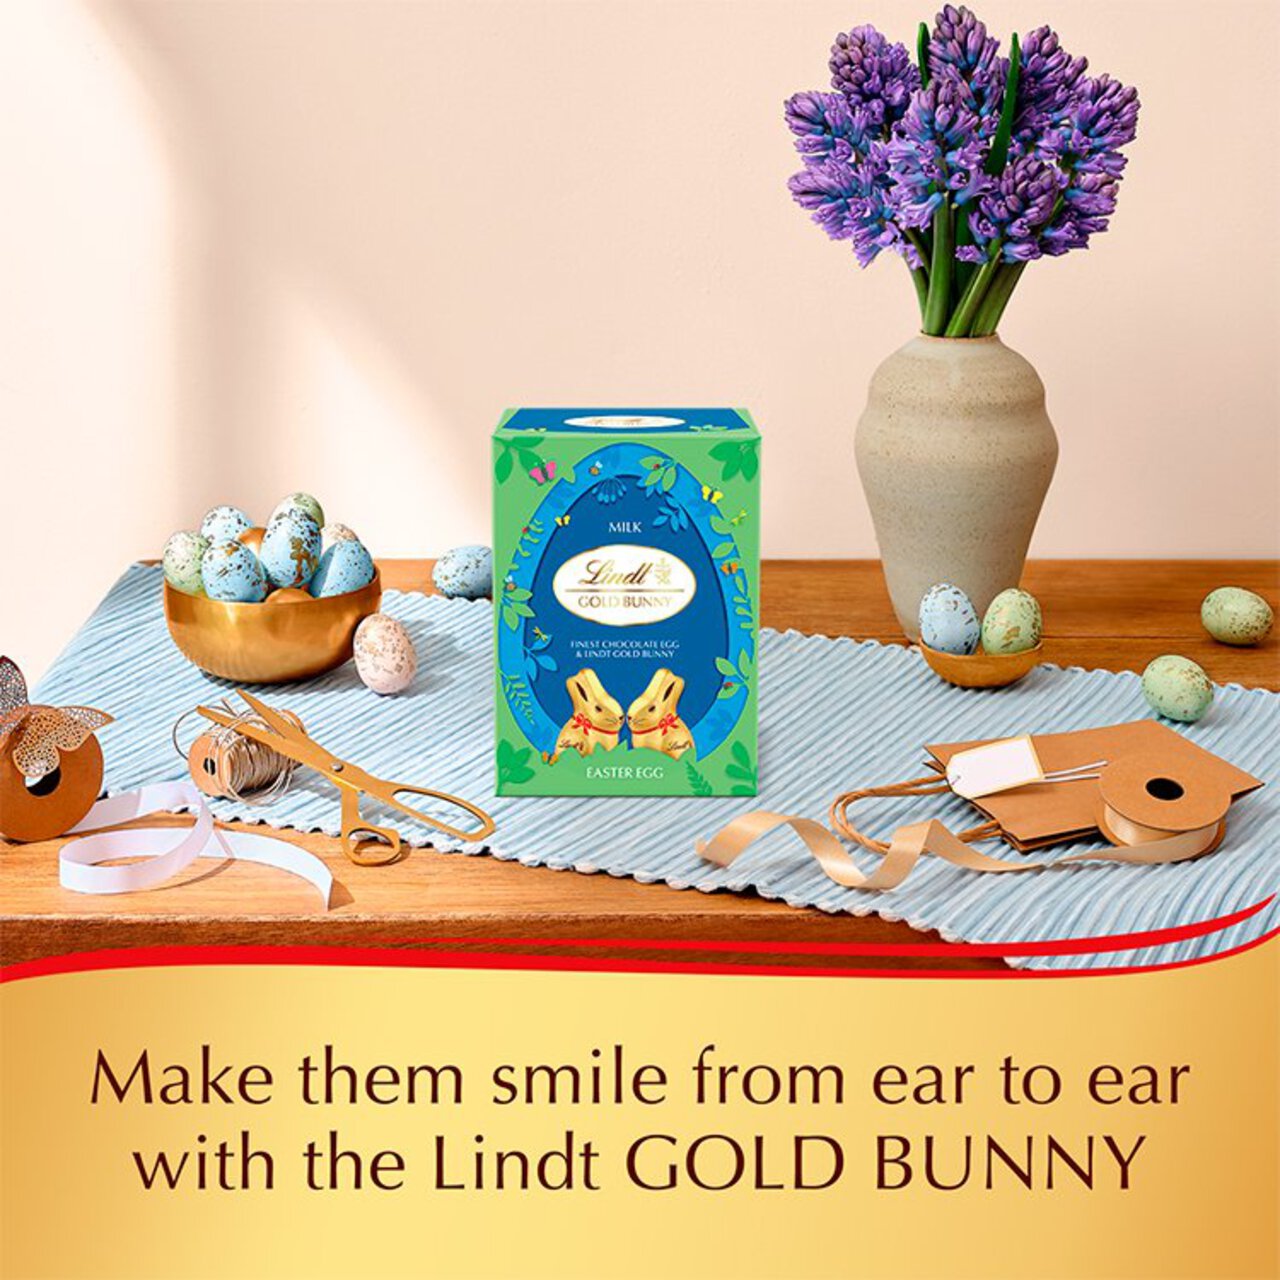 Lindt Gold Bunny Milk Chocolate Medium Easter Egg 115g